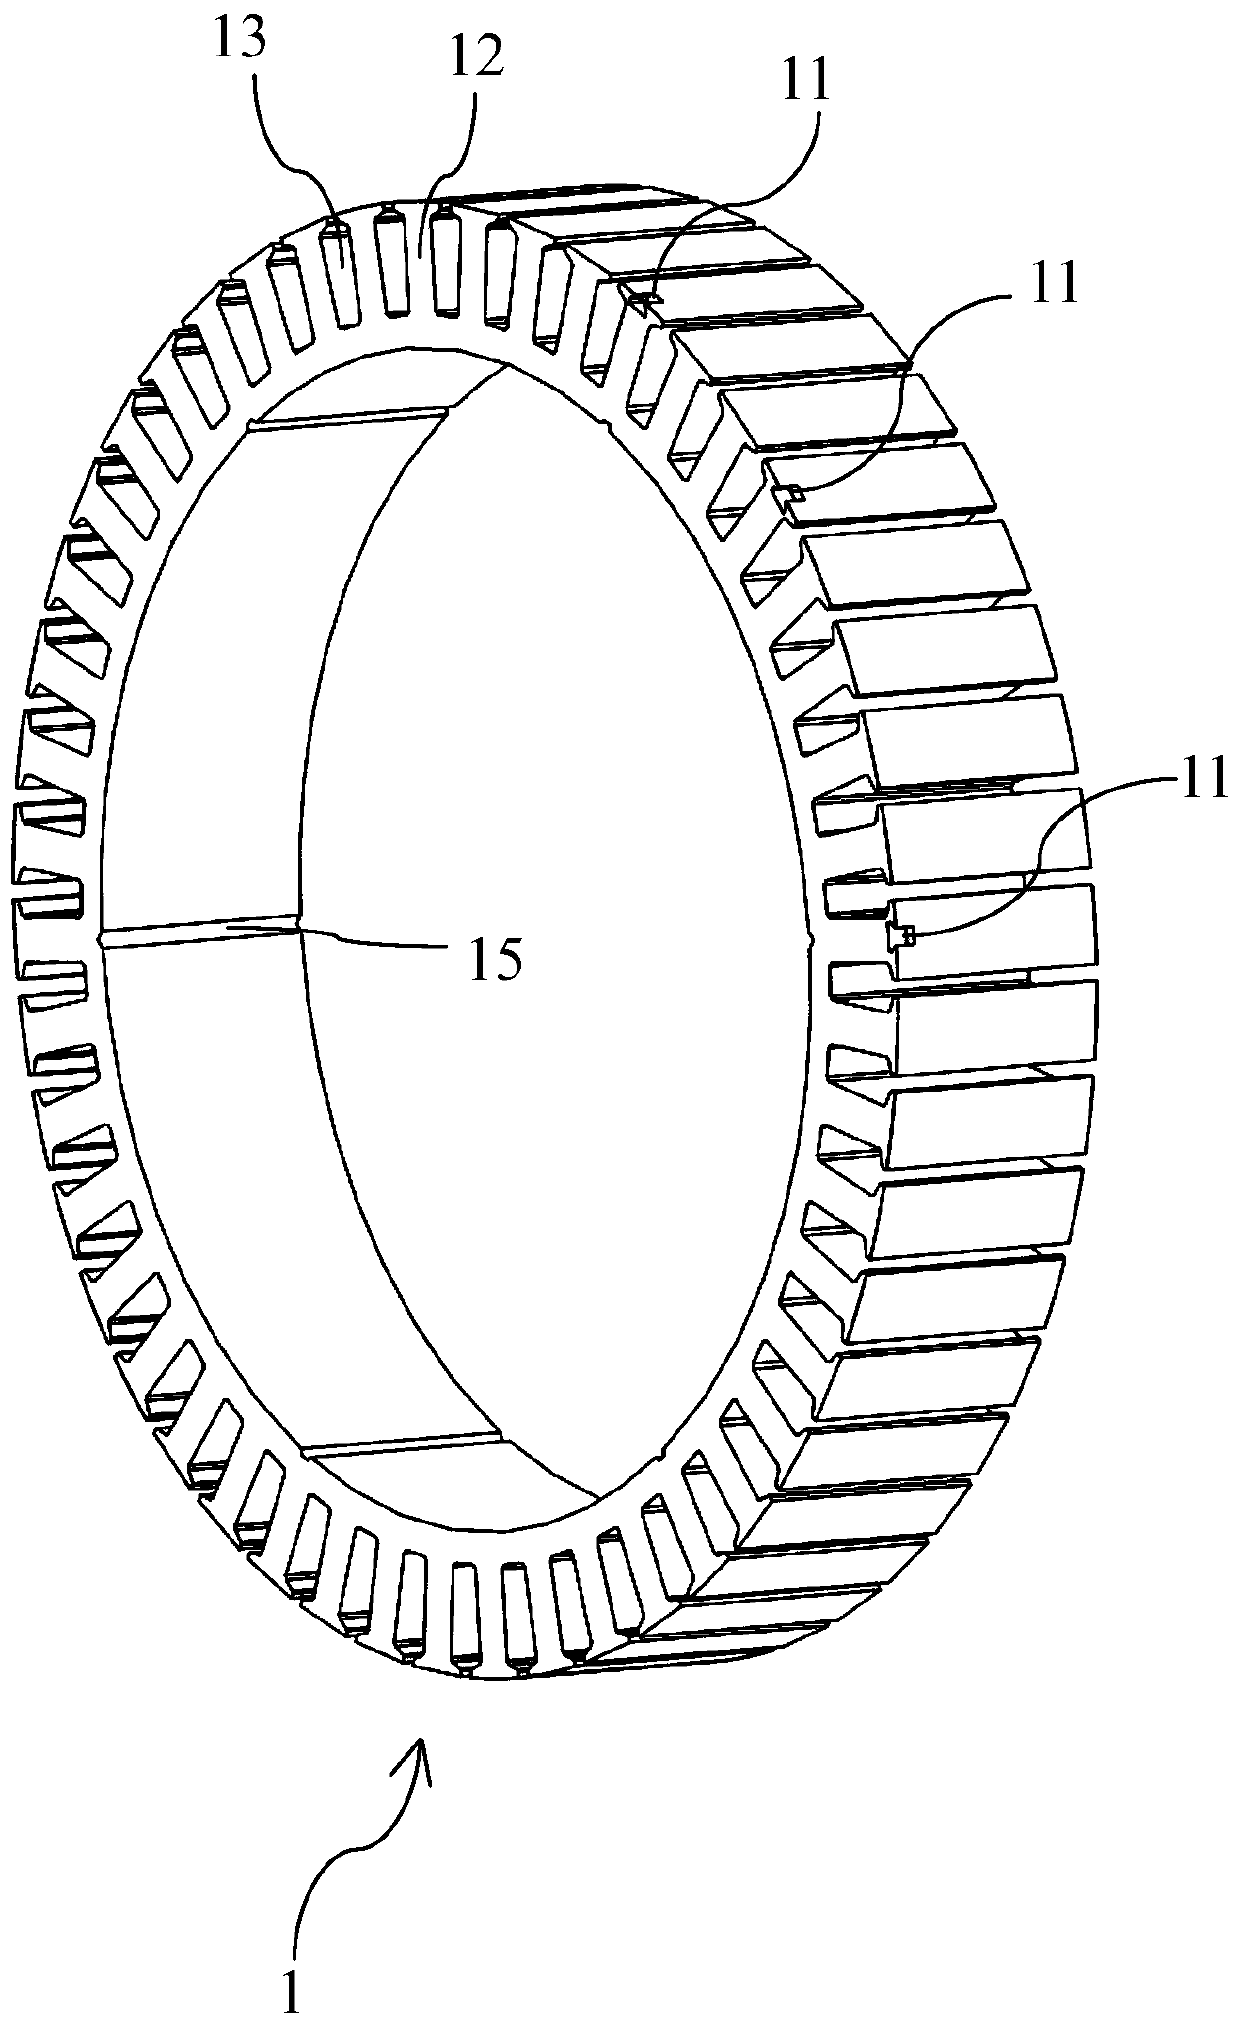 Stator of wheel hub motor for electric vehicle